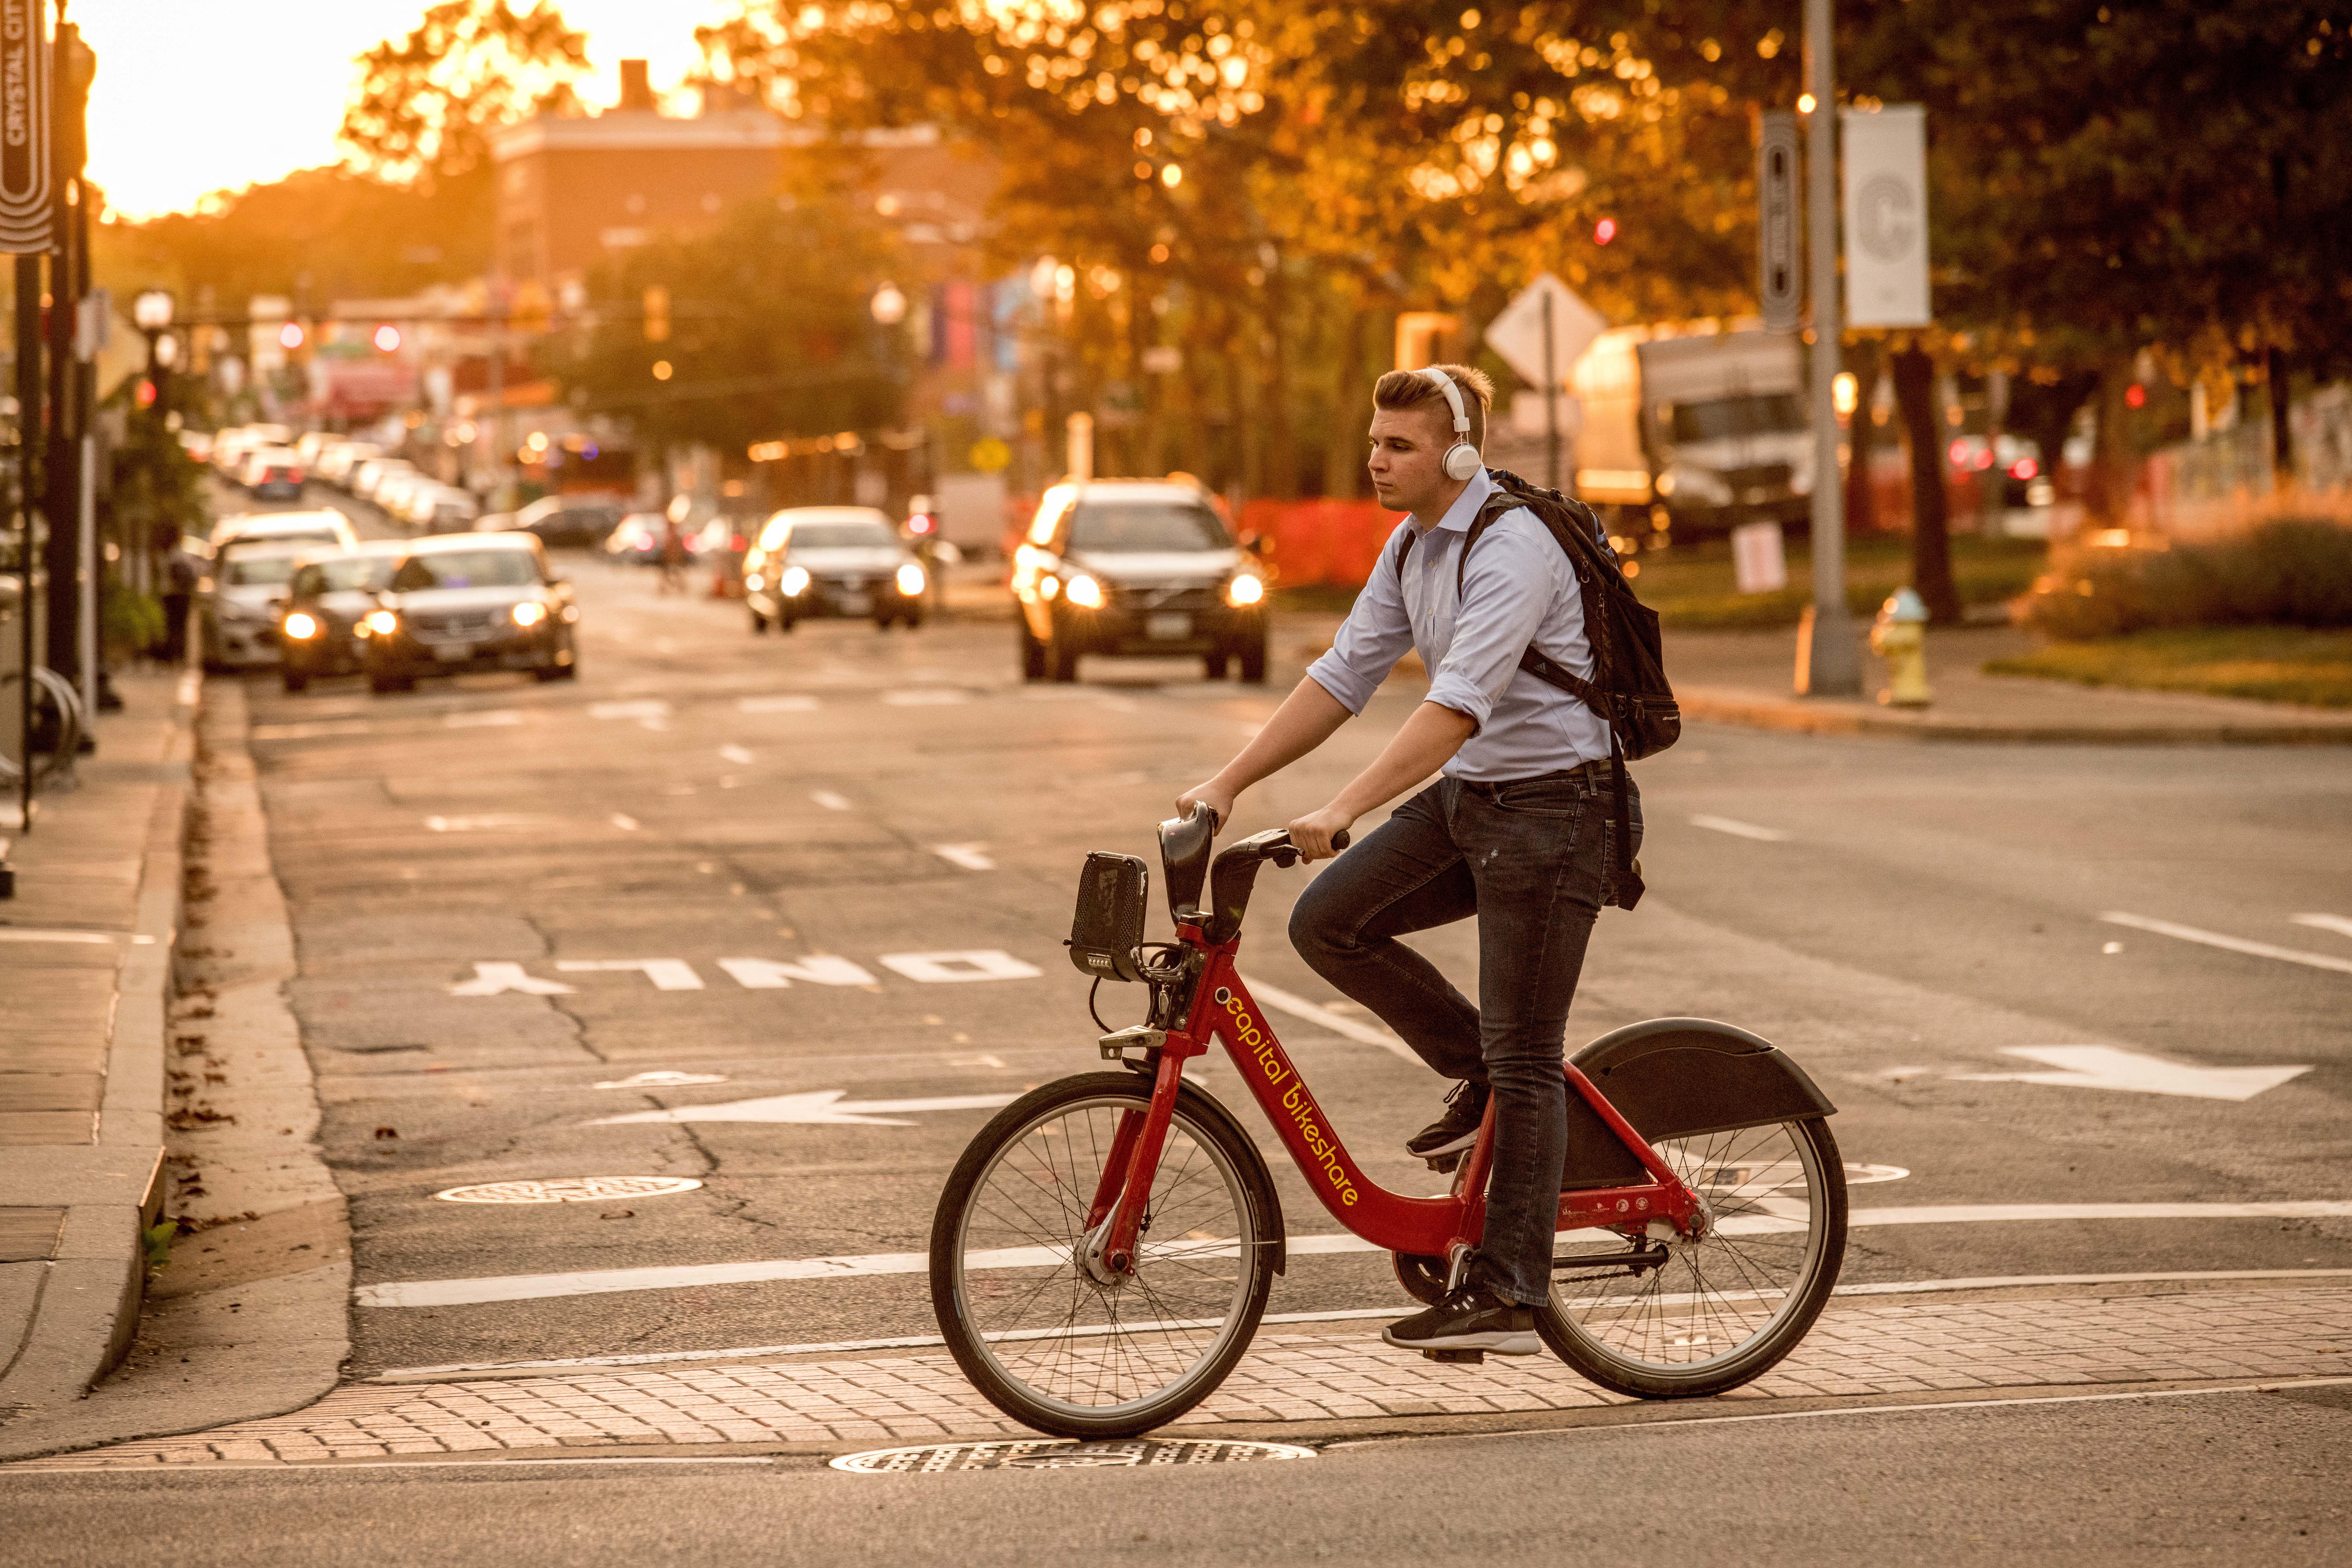 Bike share lanes throughout local roadways